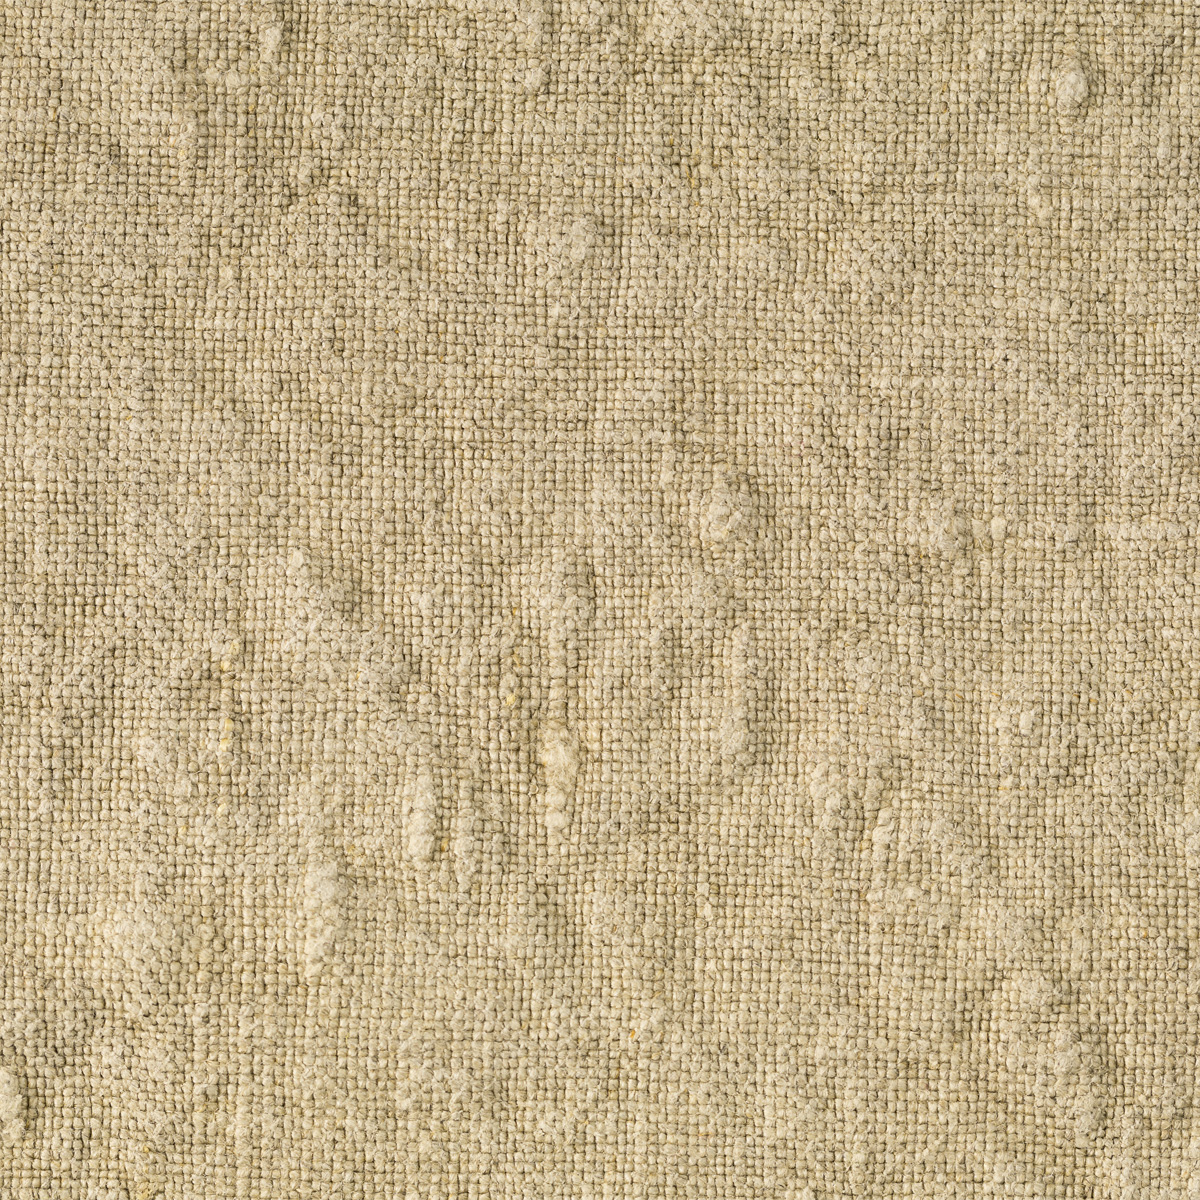 Wheat Bag Texture